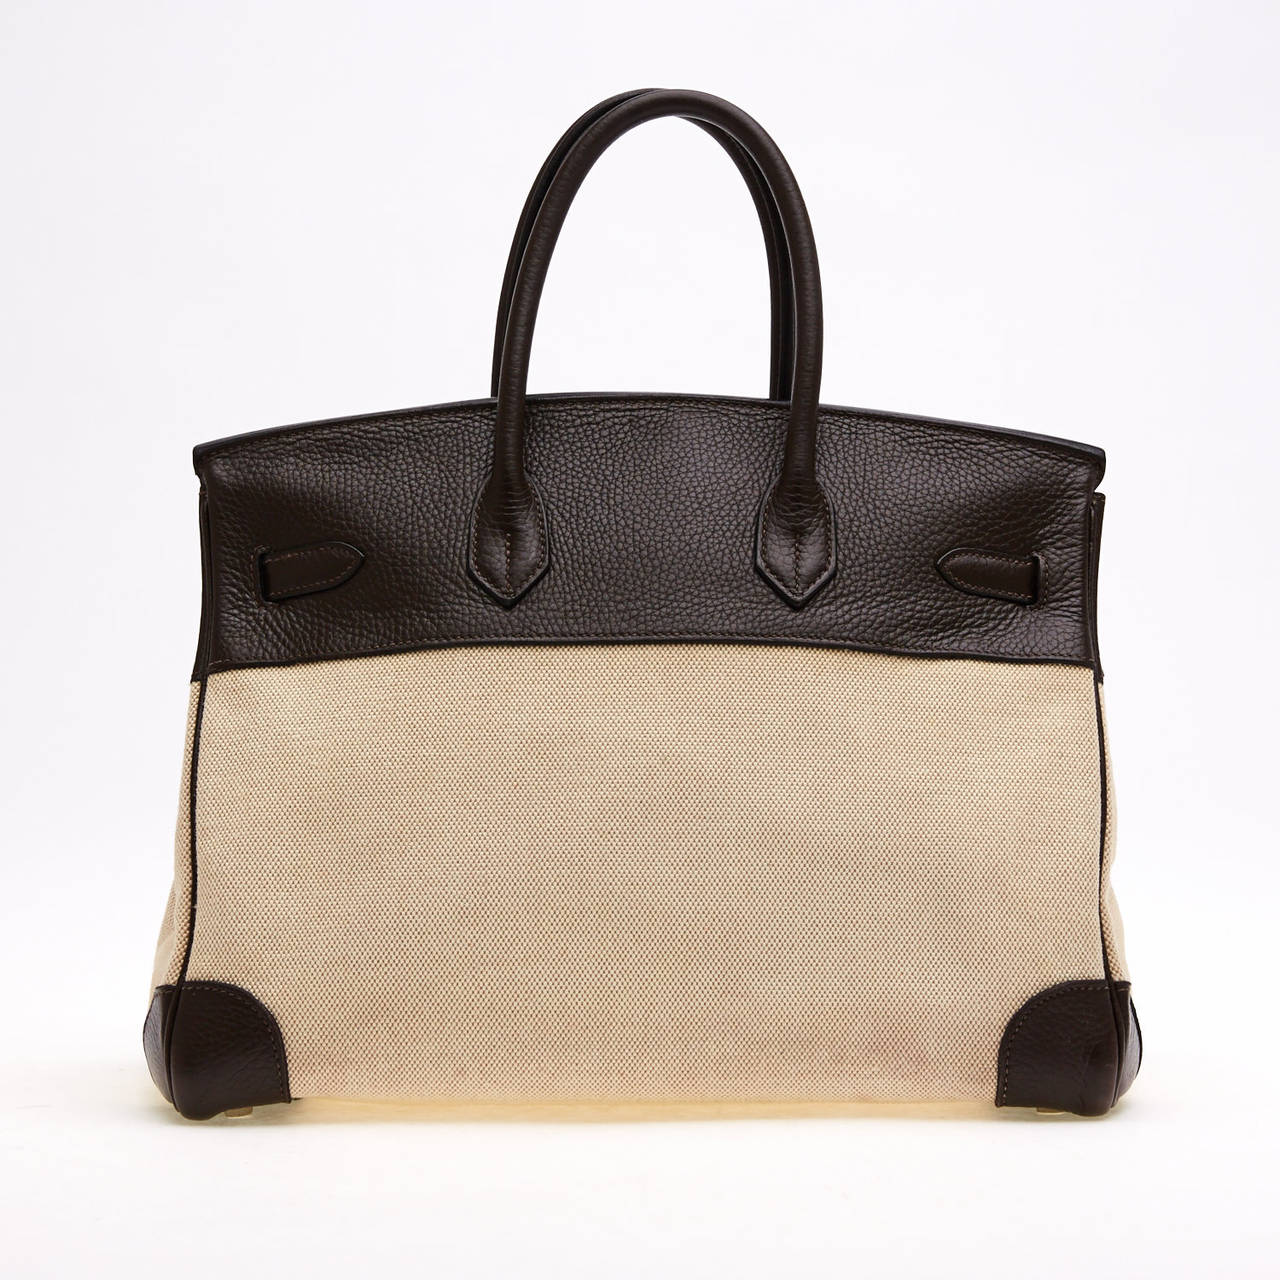 canvas birkin style bag